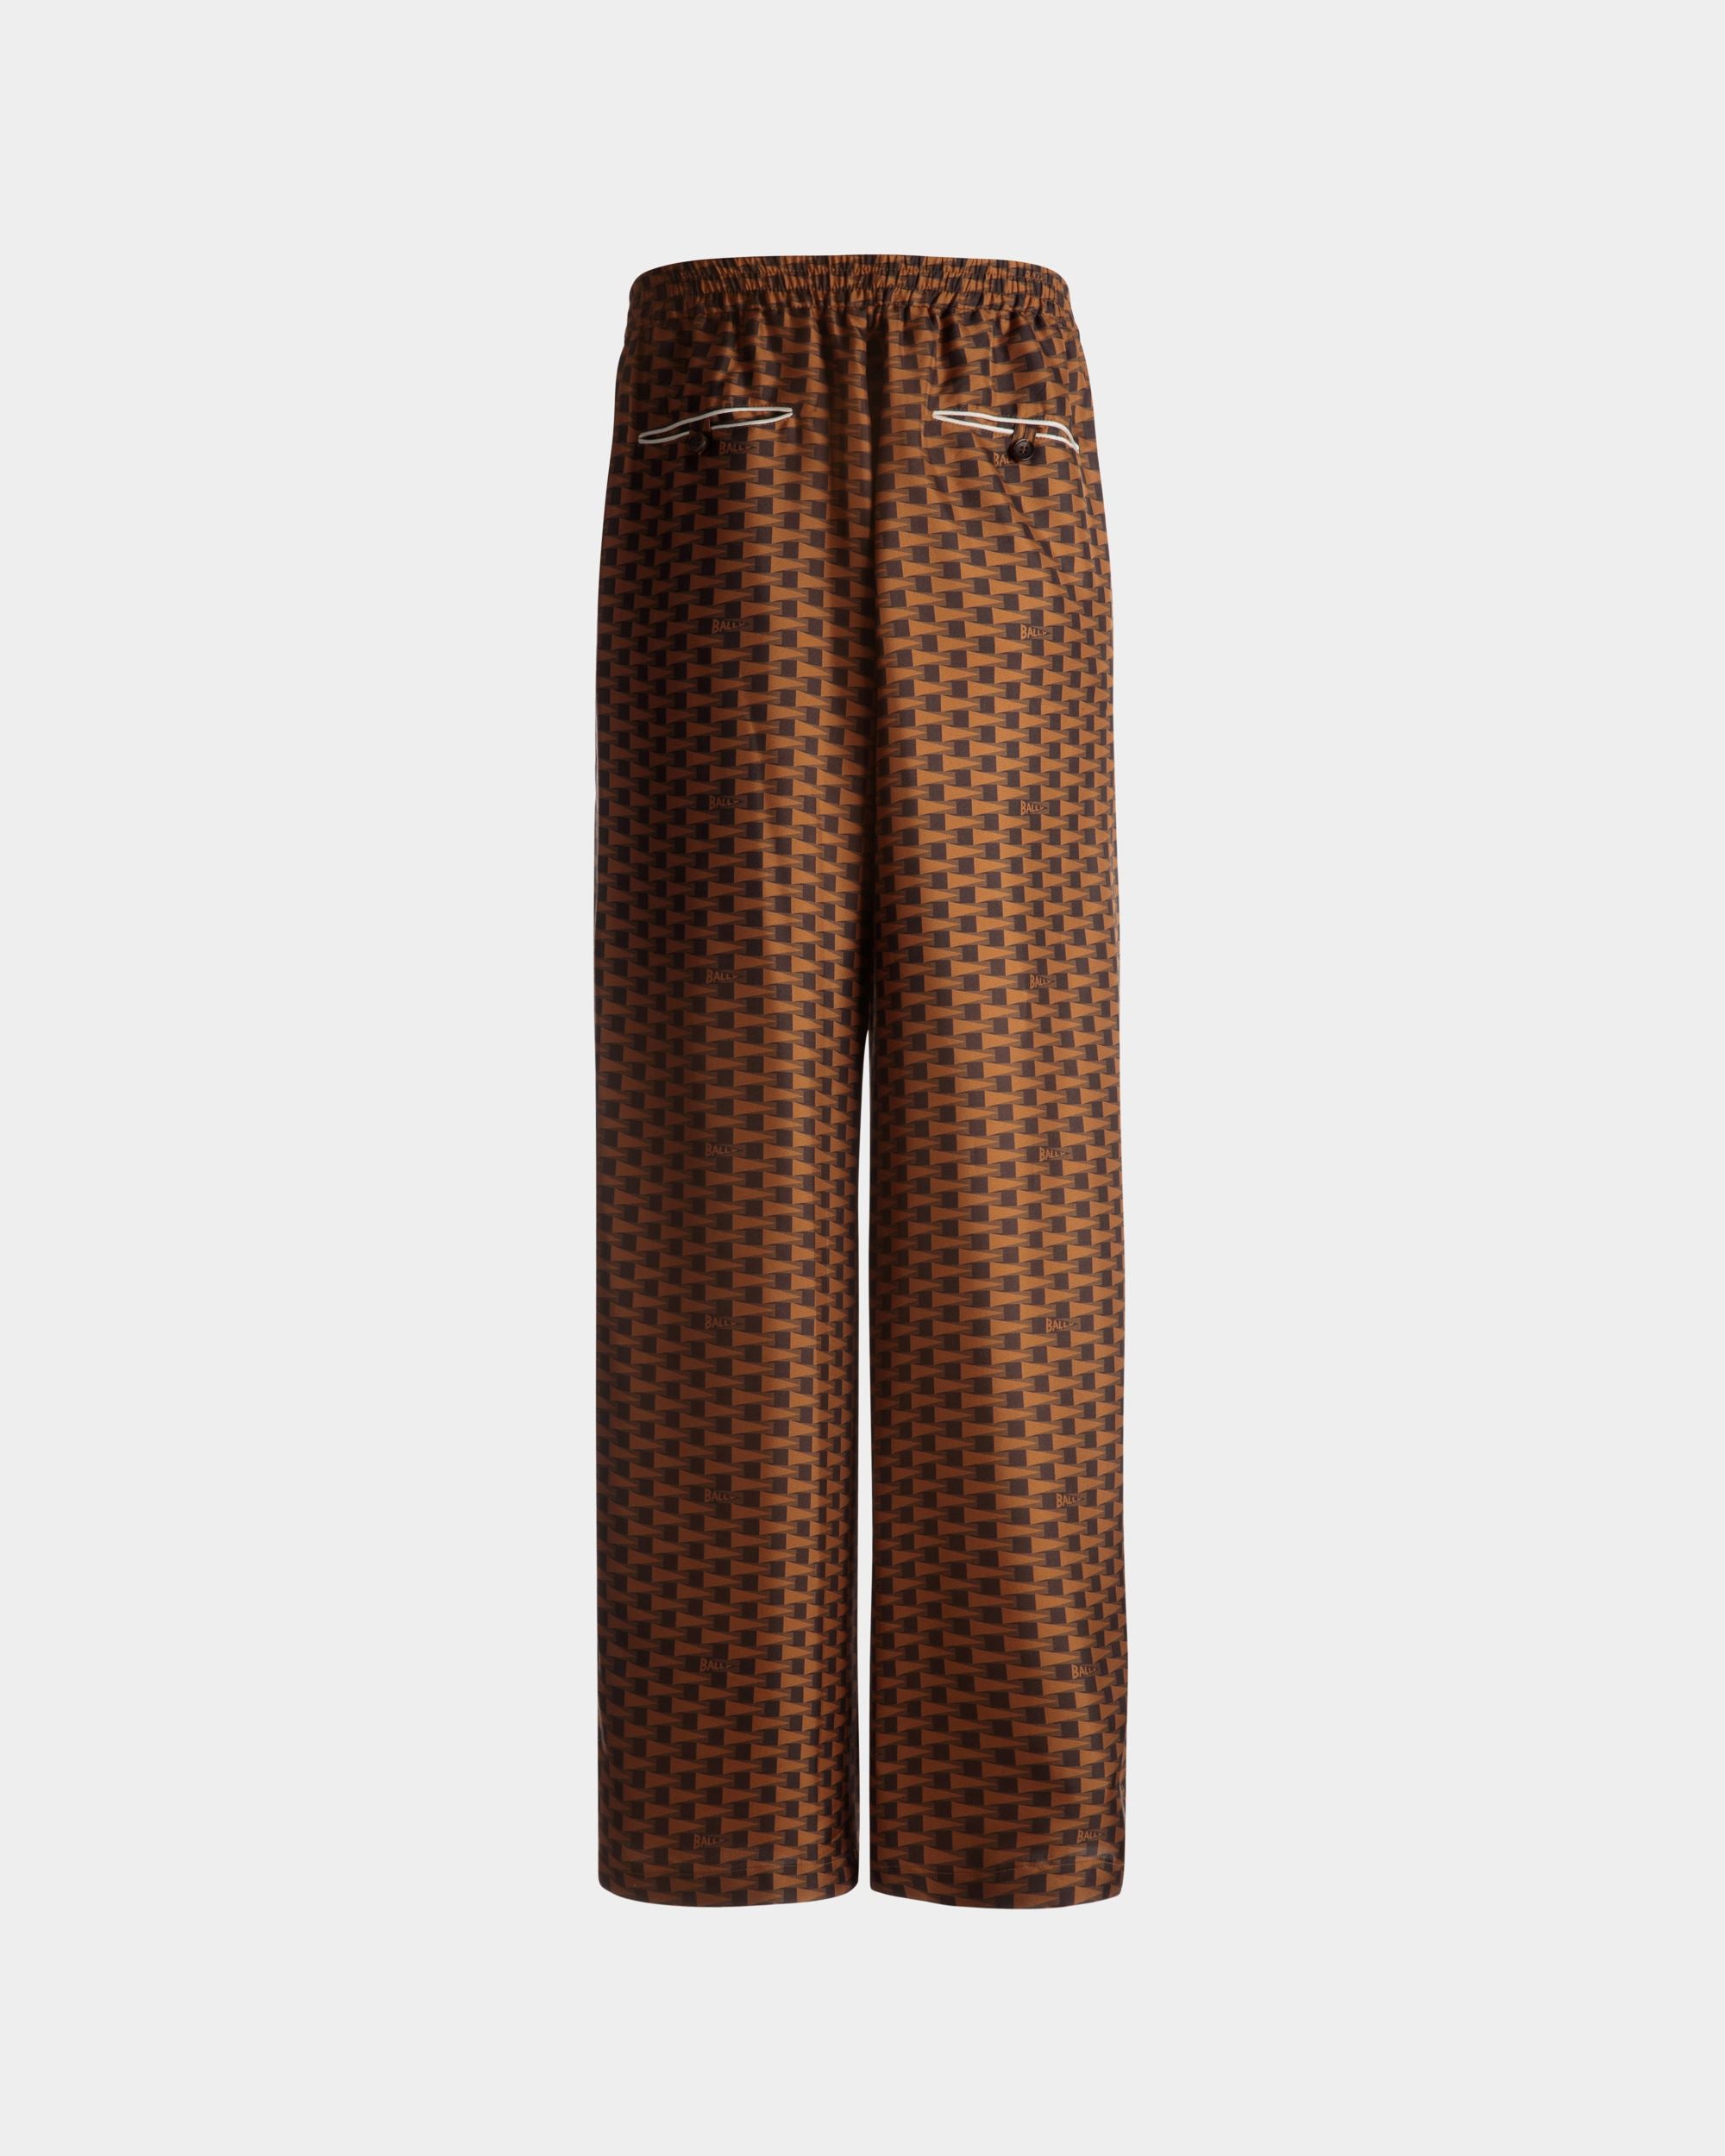 Pennant Print Pants | Men's Pants | Brown Silk | Bally | Still Life Back